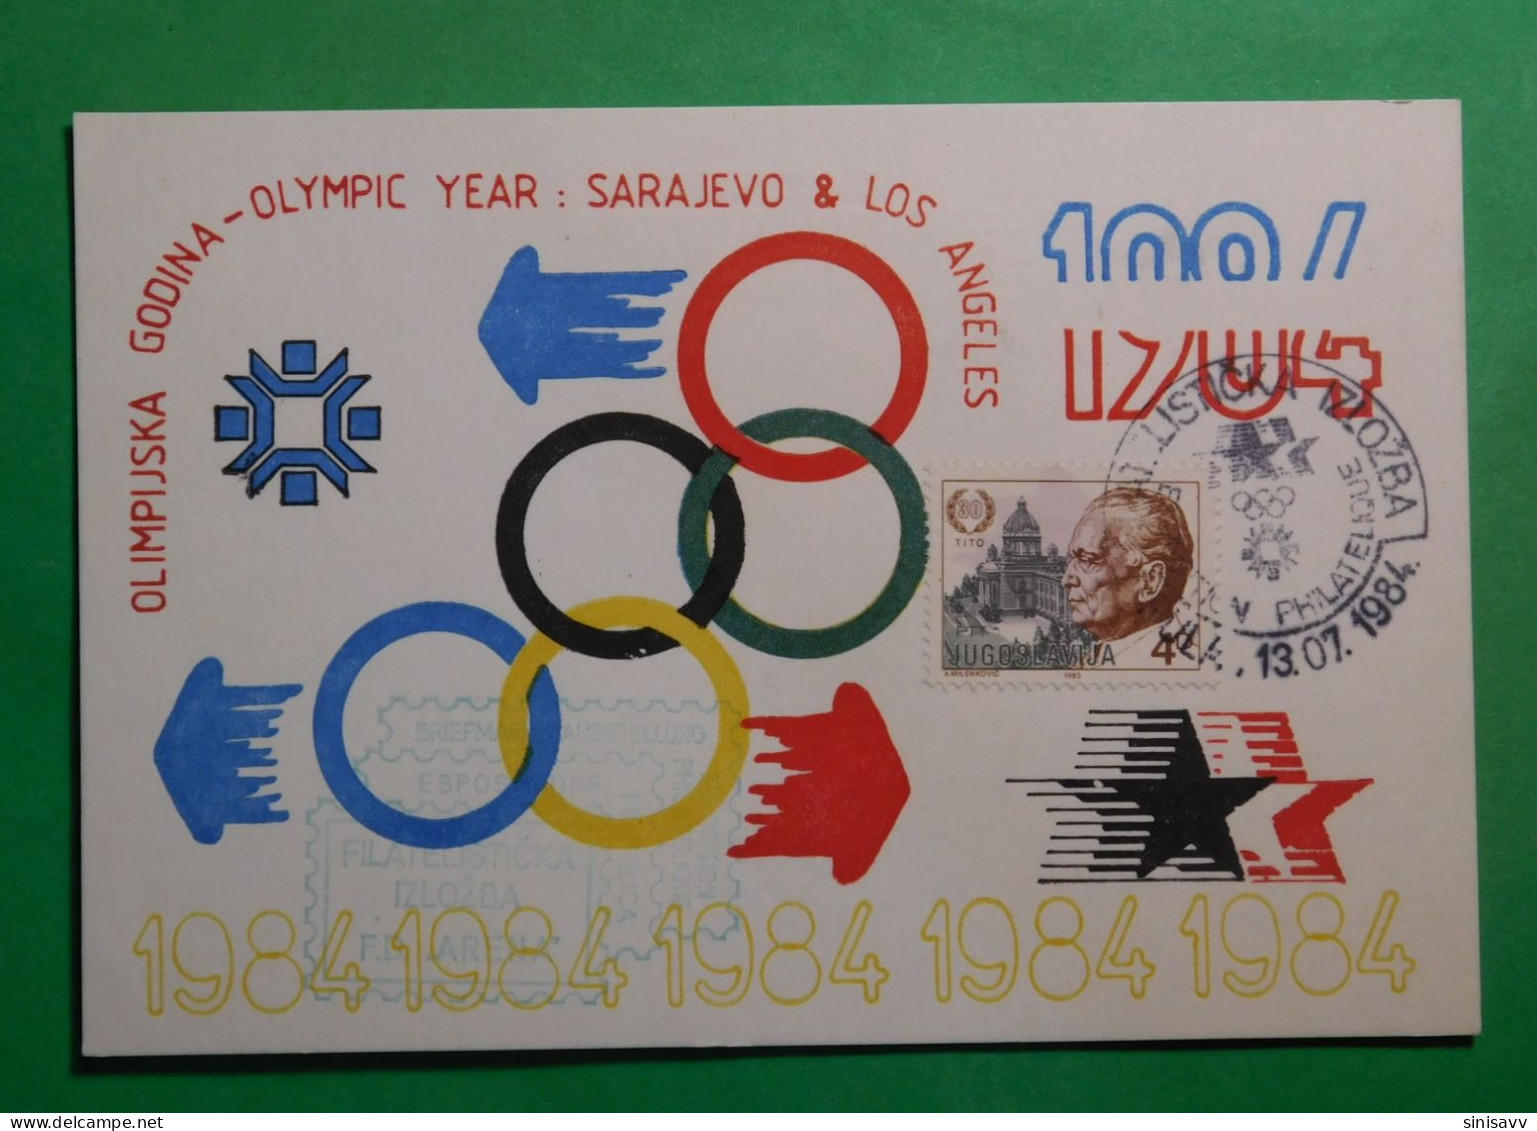 Olympic Year 1984: Sarajevo & Los Angeles - Yugoslavia F.D Arena - Pula - Estate 1984: Los Angeles